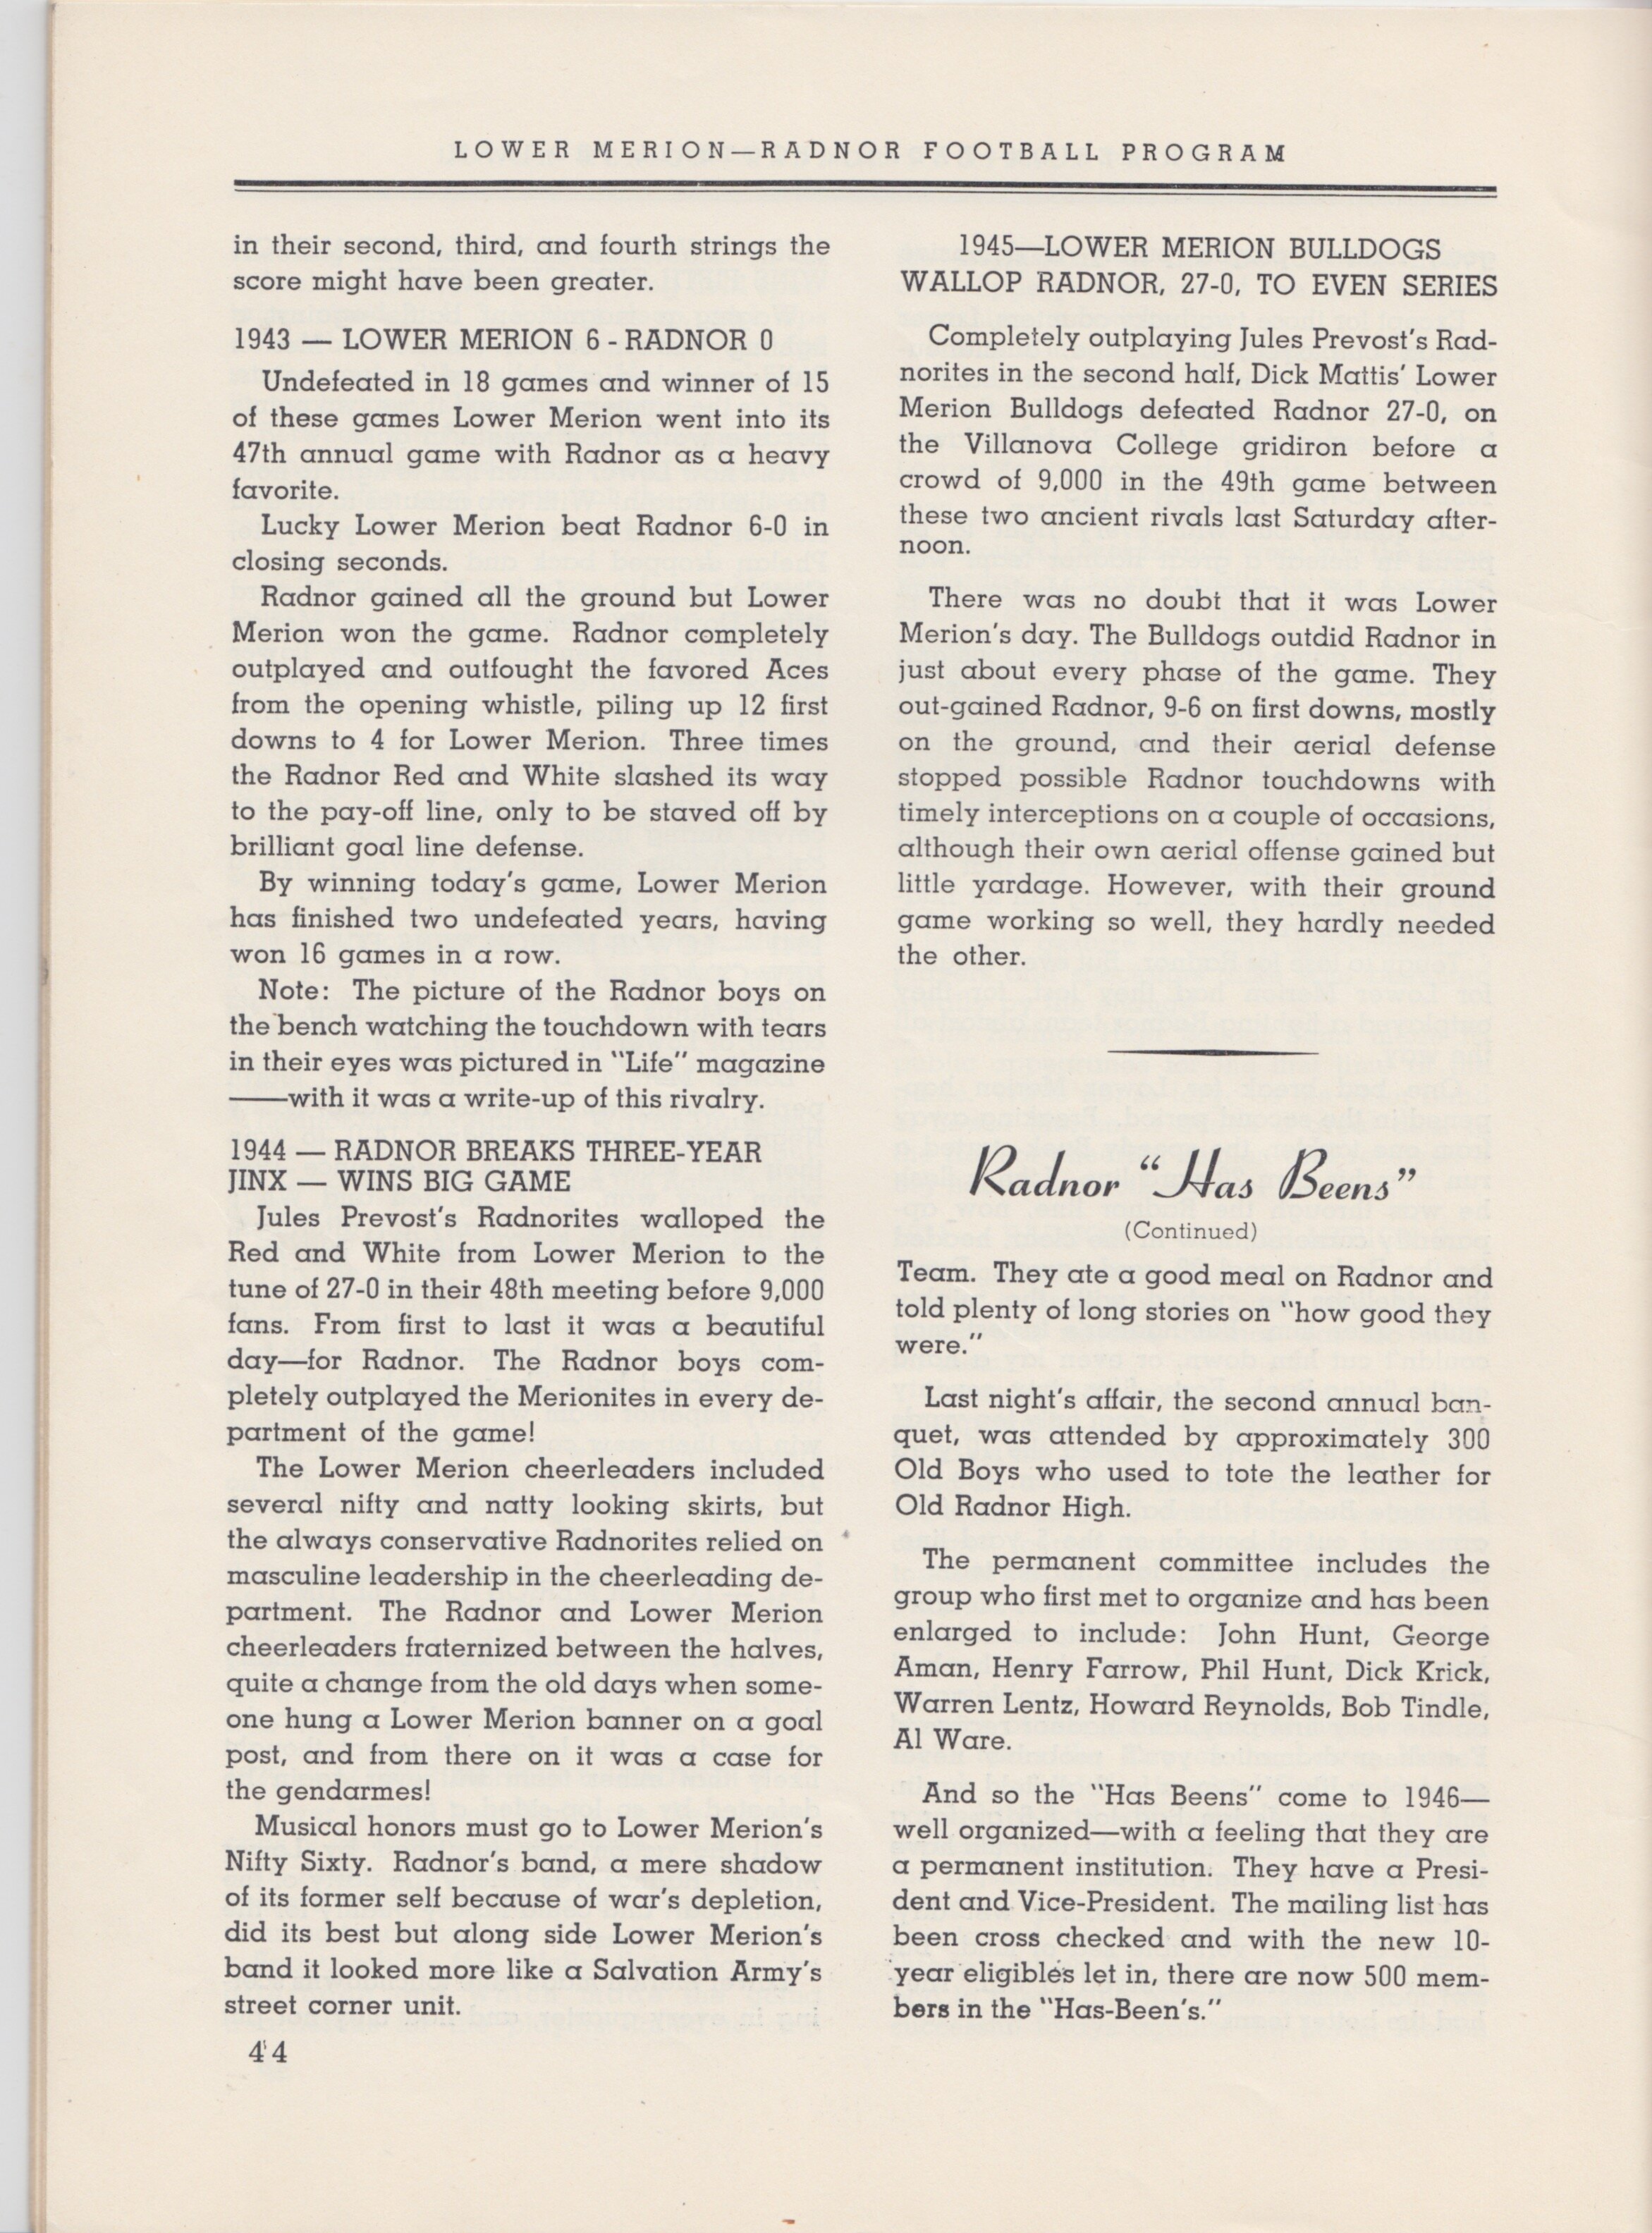 1946 Radnor v. LM Program RAA 39.jpeg